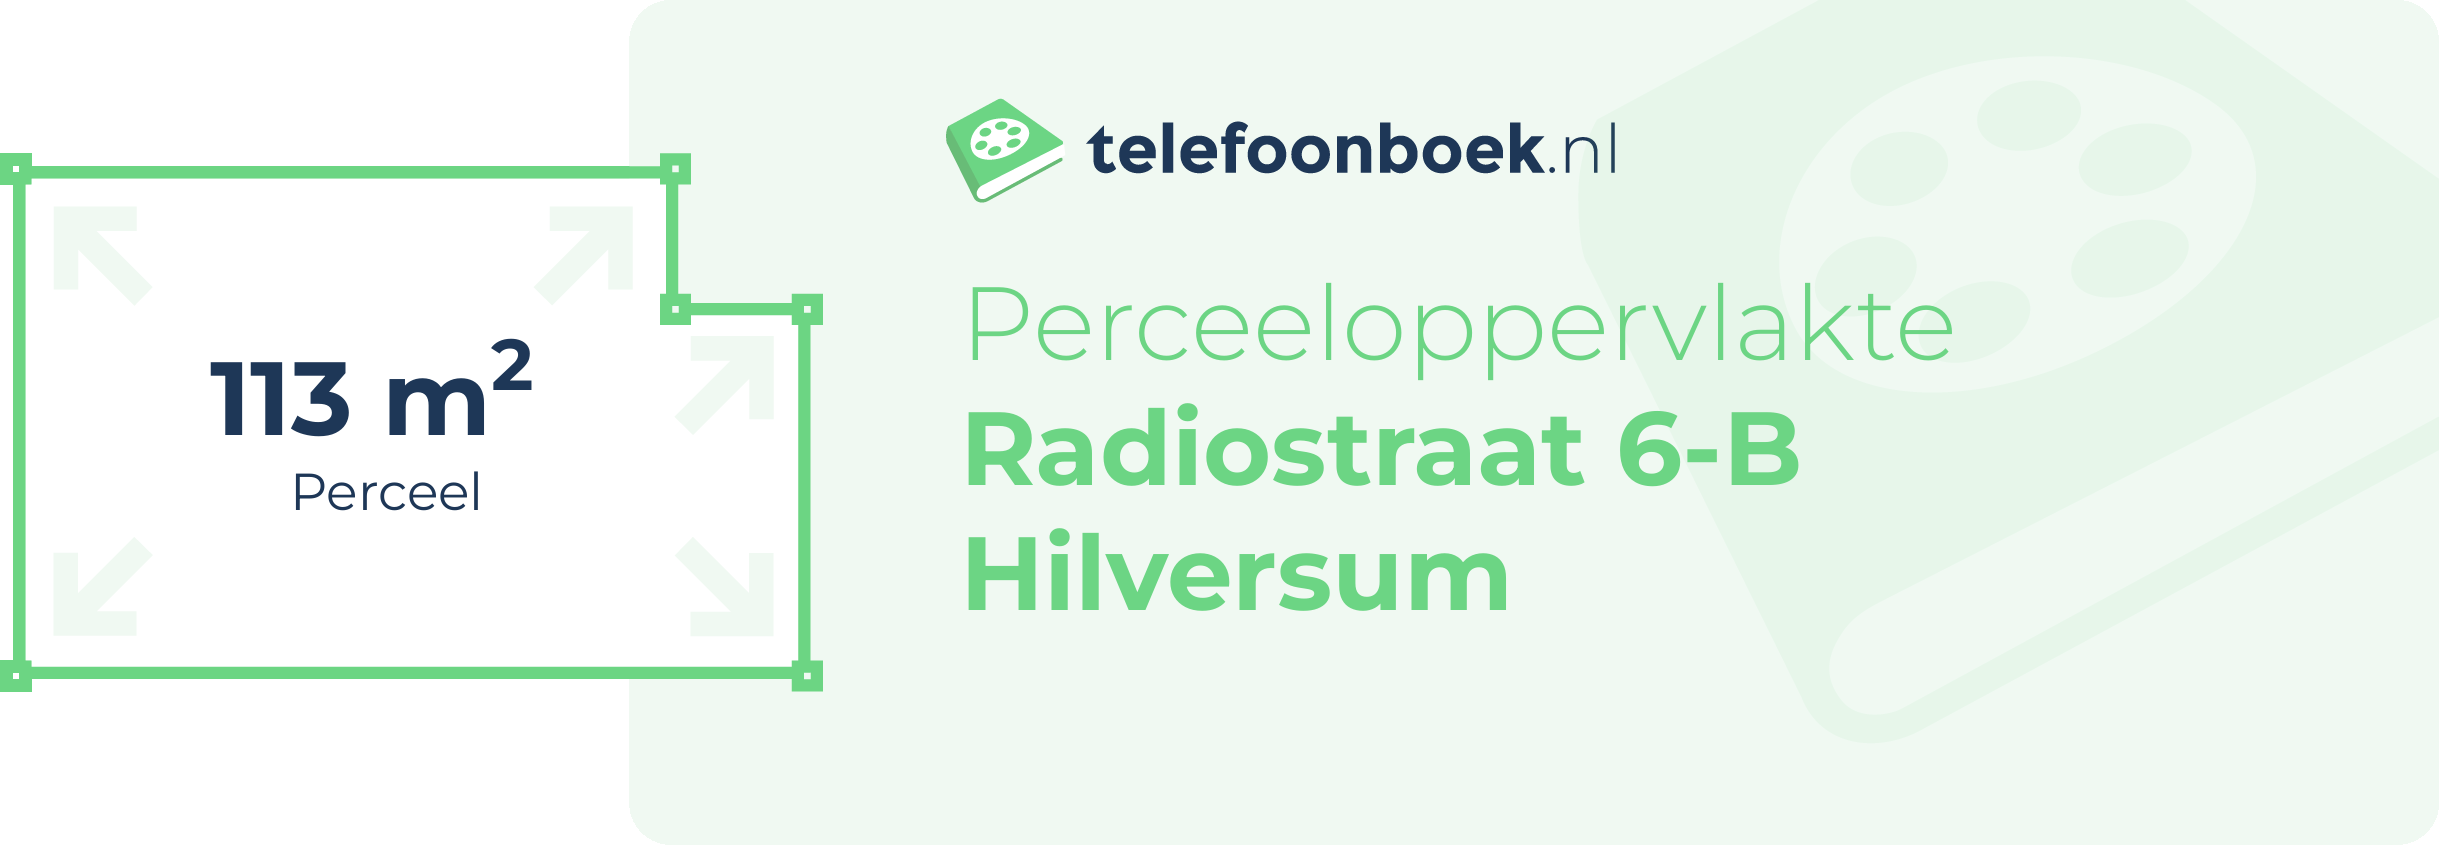 Perceeloppervlakte Radiostraat 6-B Hilversum